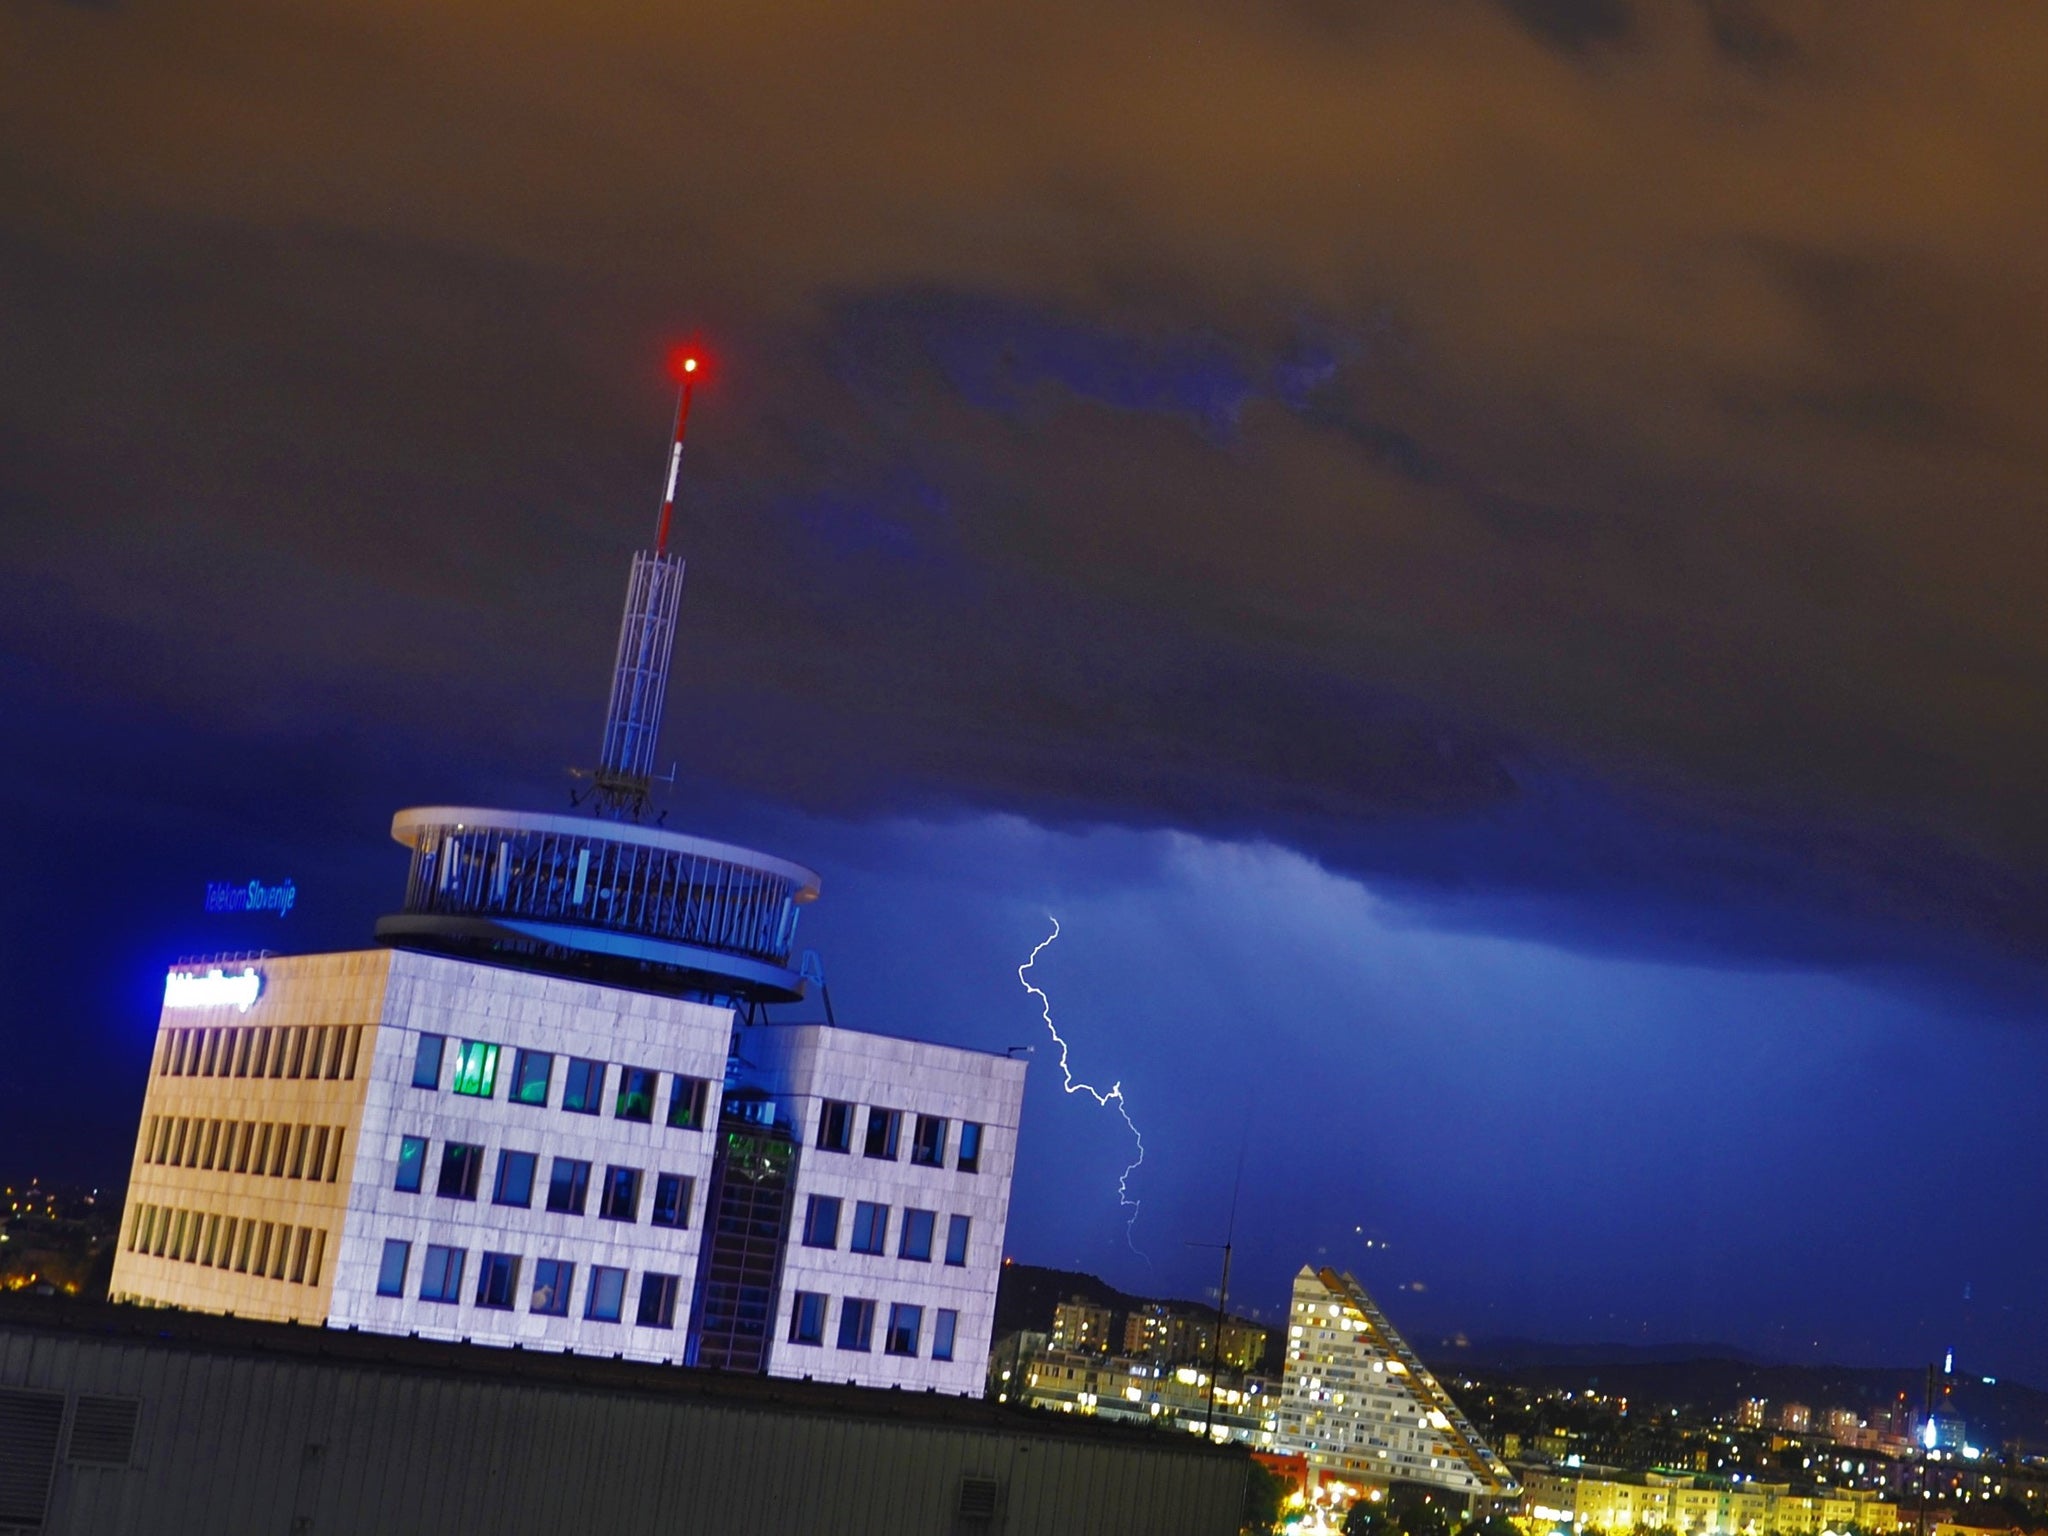 Shock treatment: lightning over Ljubljana